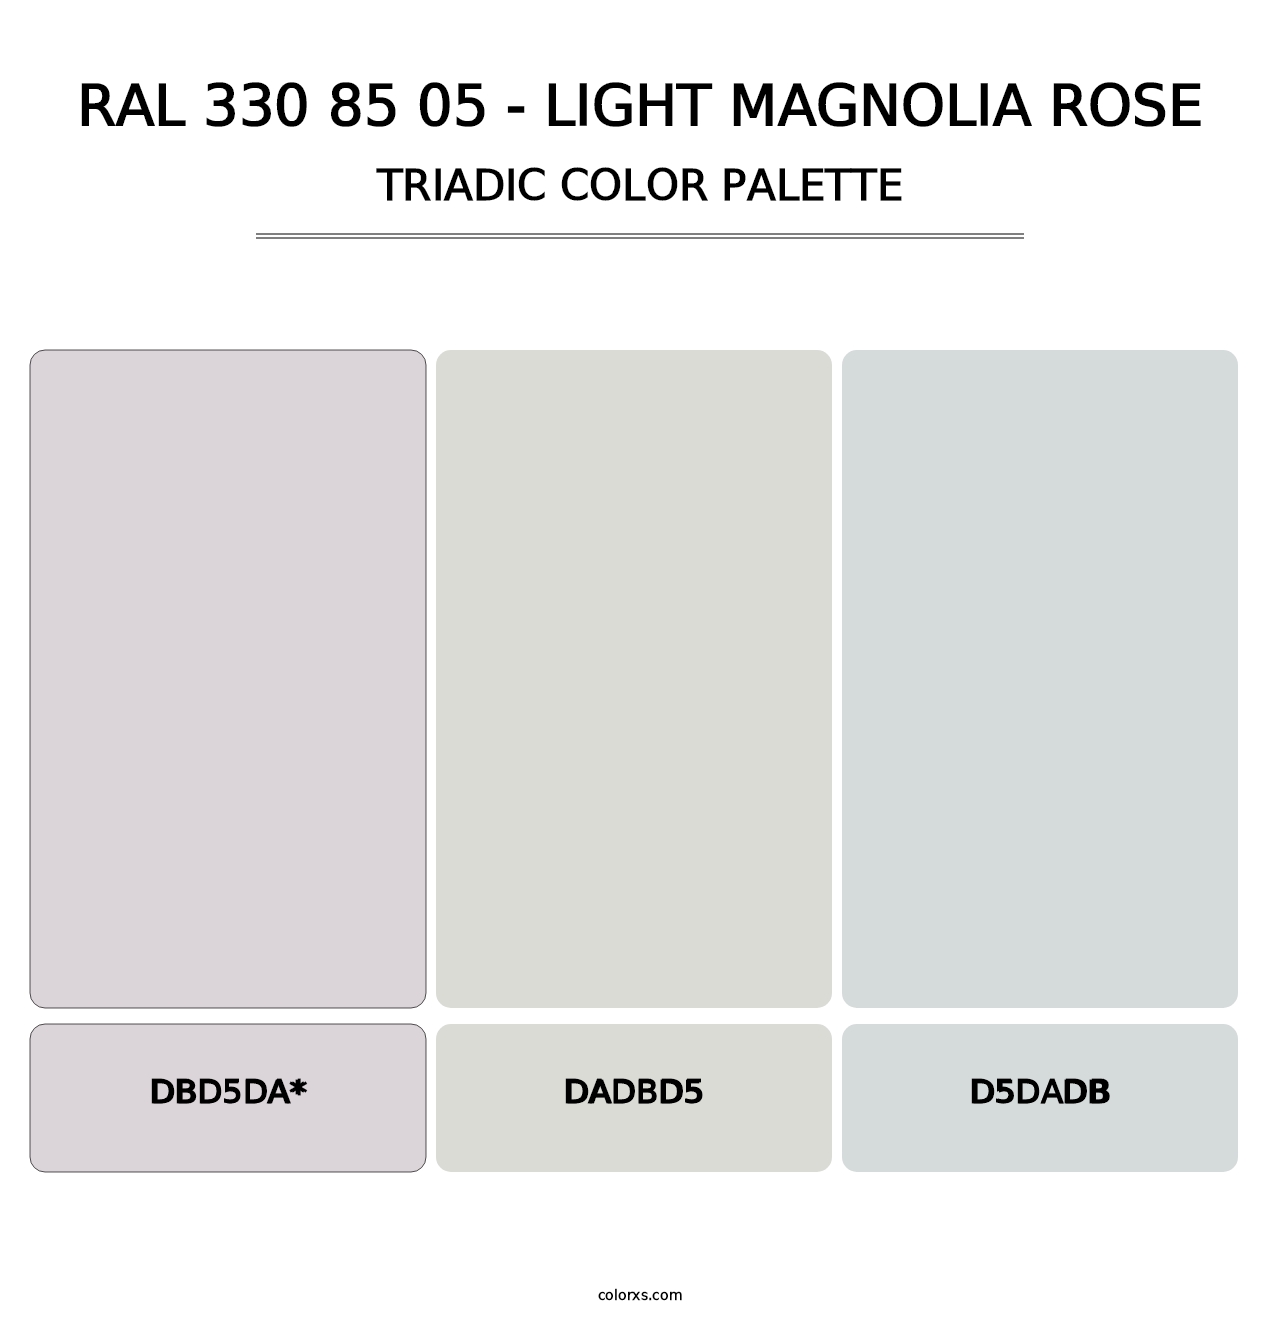 RAL 330 85 05 - Light Magnolia Rose - Triadic Color Palette